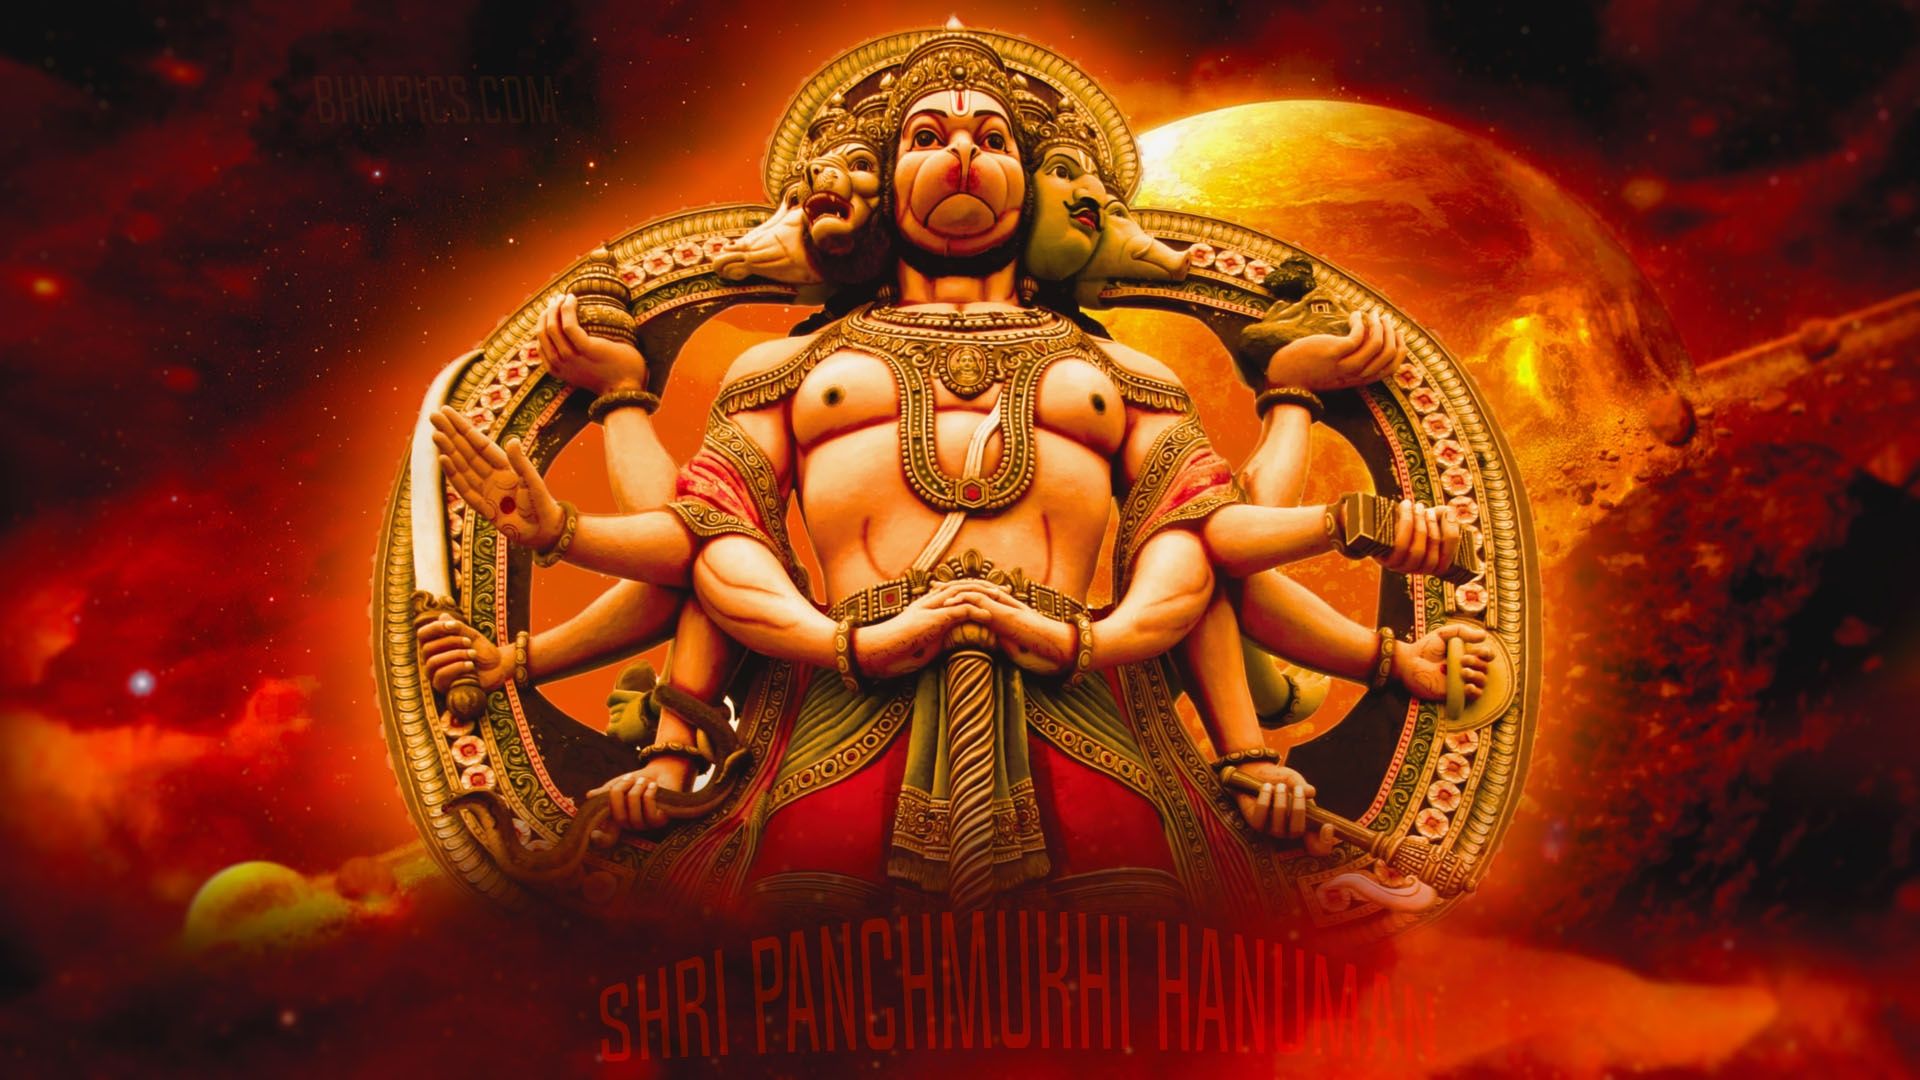 Shri Panchmukhi Hanuman Wallpaper